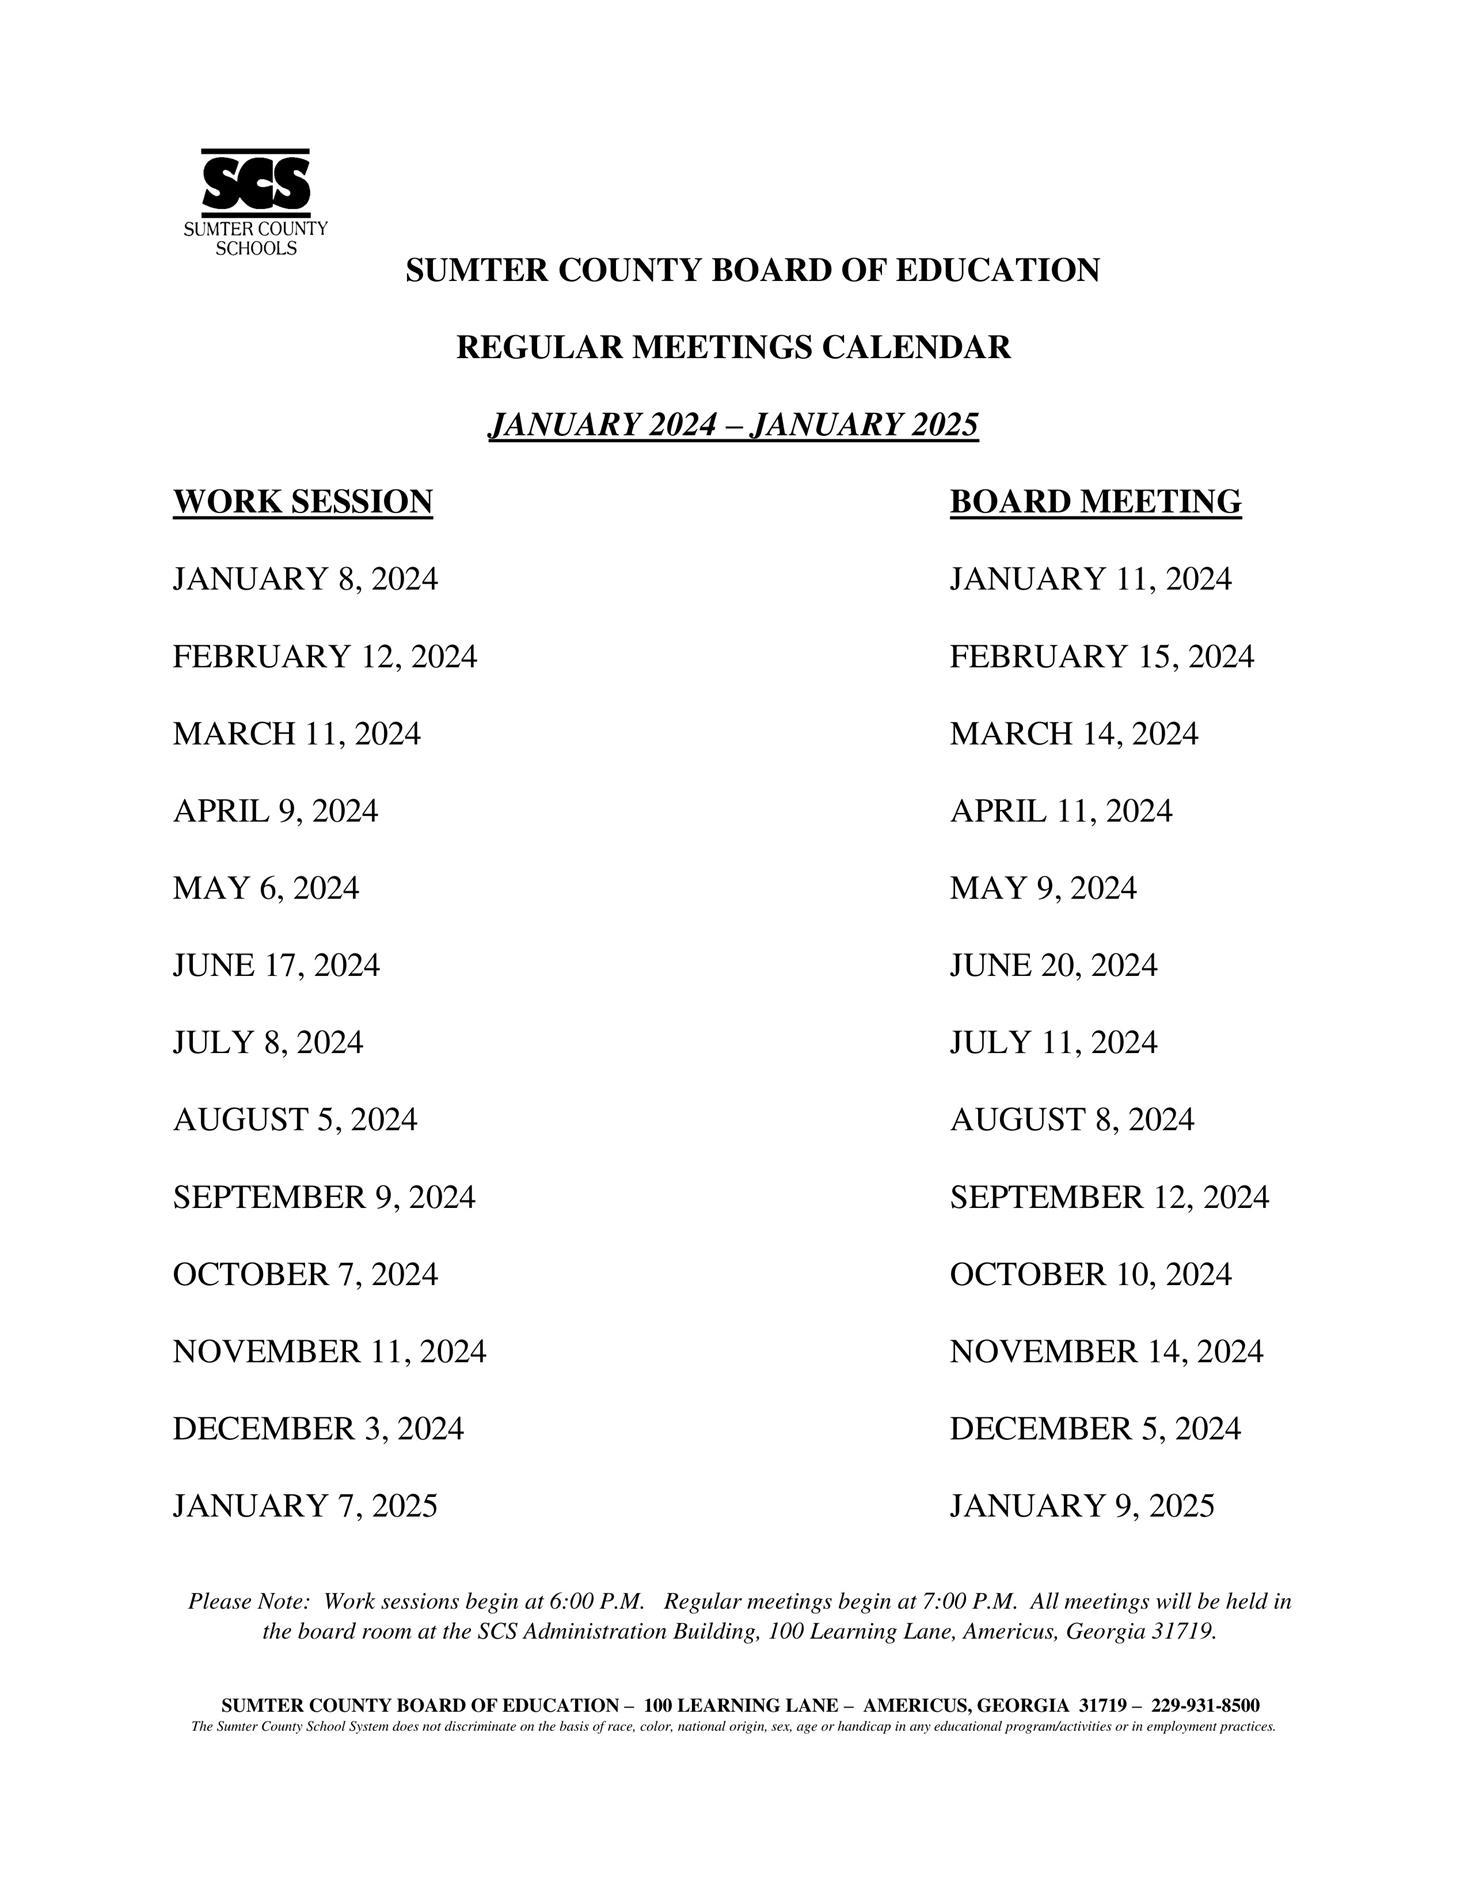 Sumter County Board of Education Meeting Calendar